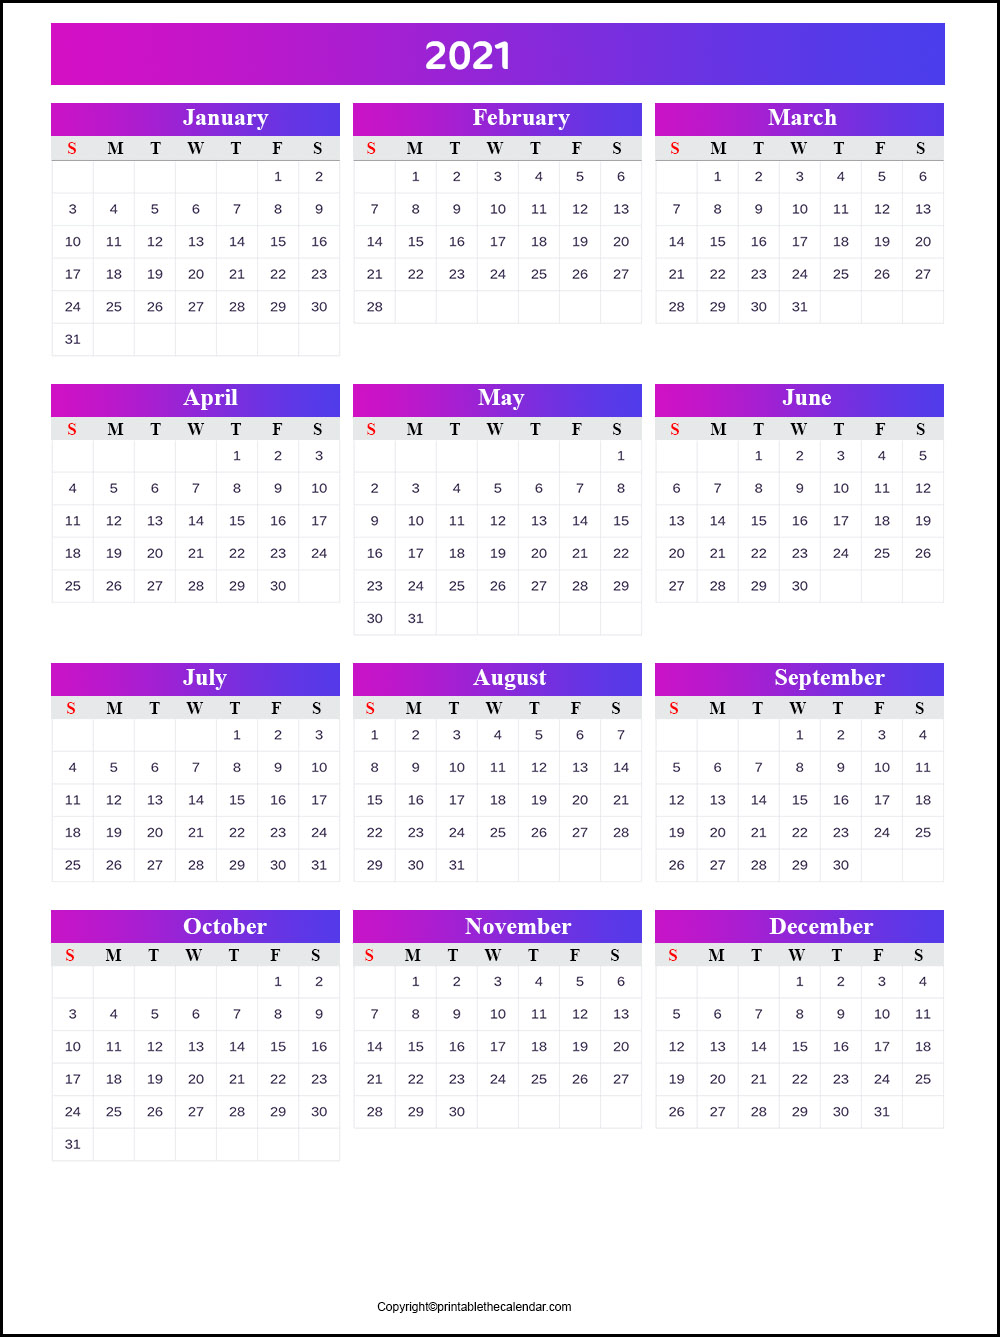 2021 Editable Calendar | Printable The Calendar